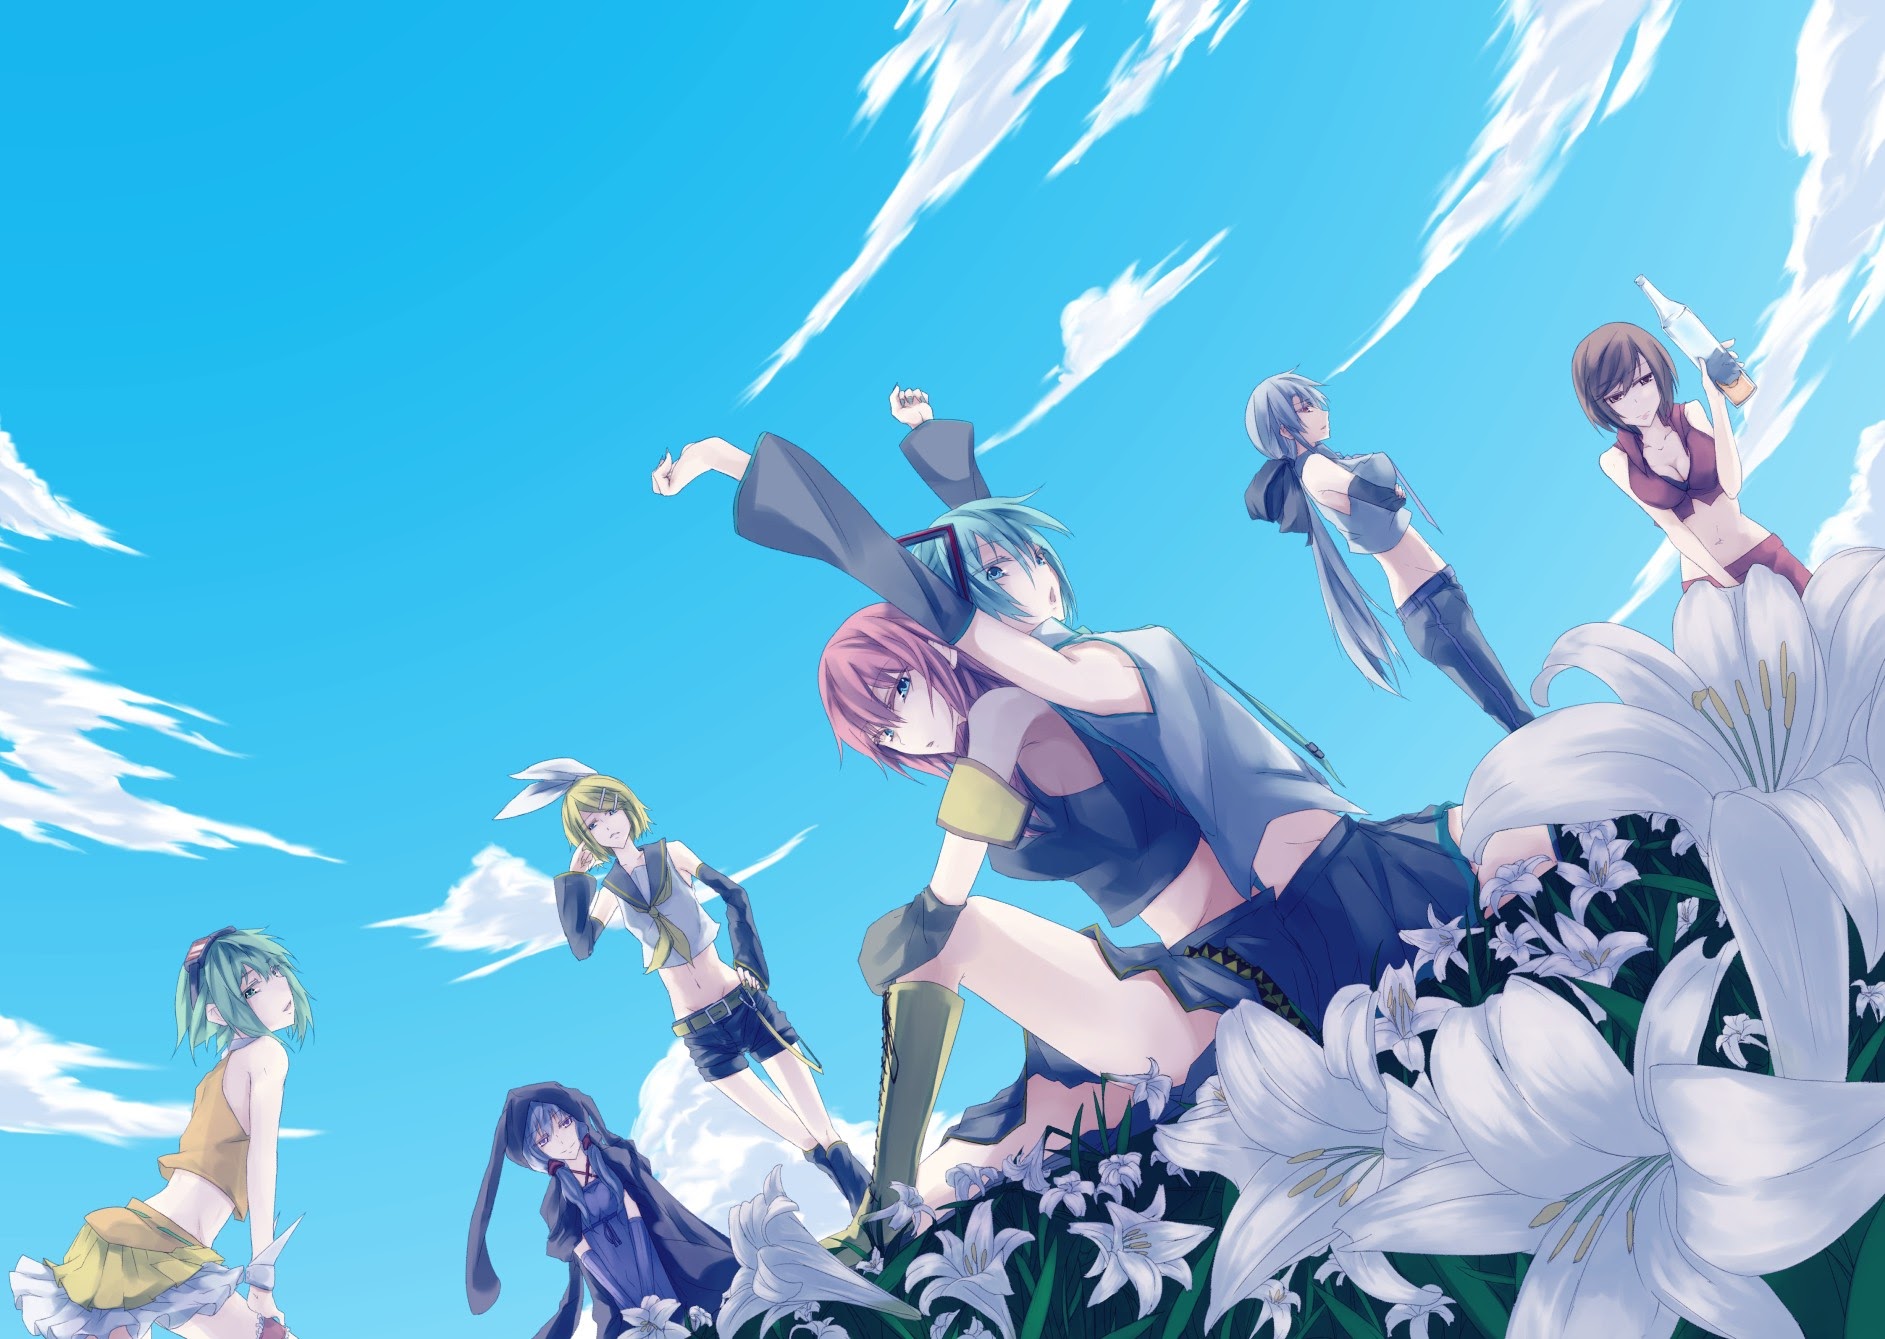 Baixar papel de parede para celular de Anime, Vocaloid, Hatsune Miku, Luka Megurine, Rin Kagamine, Gumi (Vocaloide), Meiko (Vocaloid), Yuzuki Yukari, Haku Yowane (Vocaloid) gratuito.